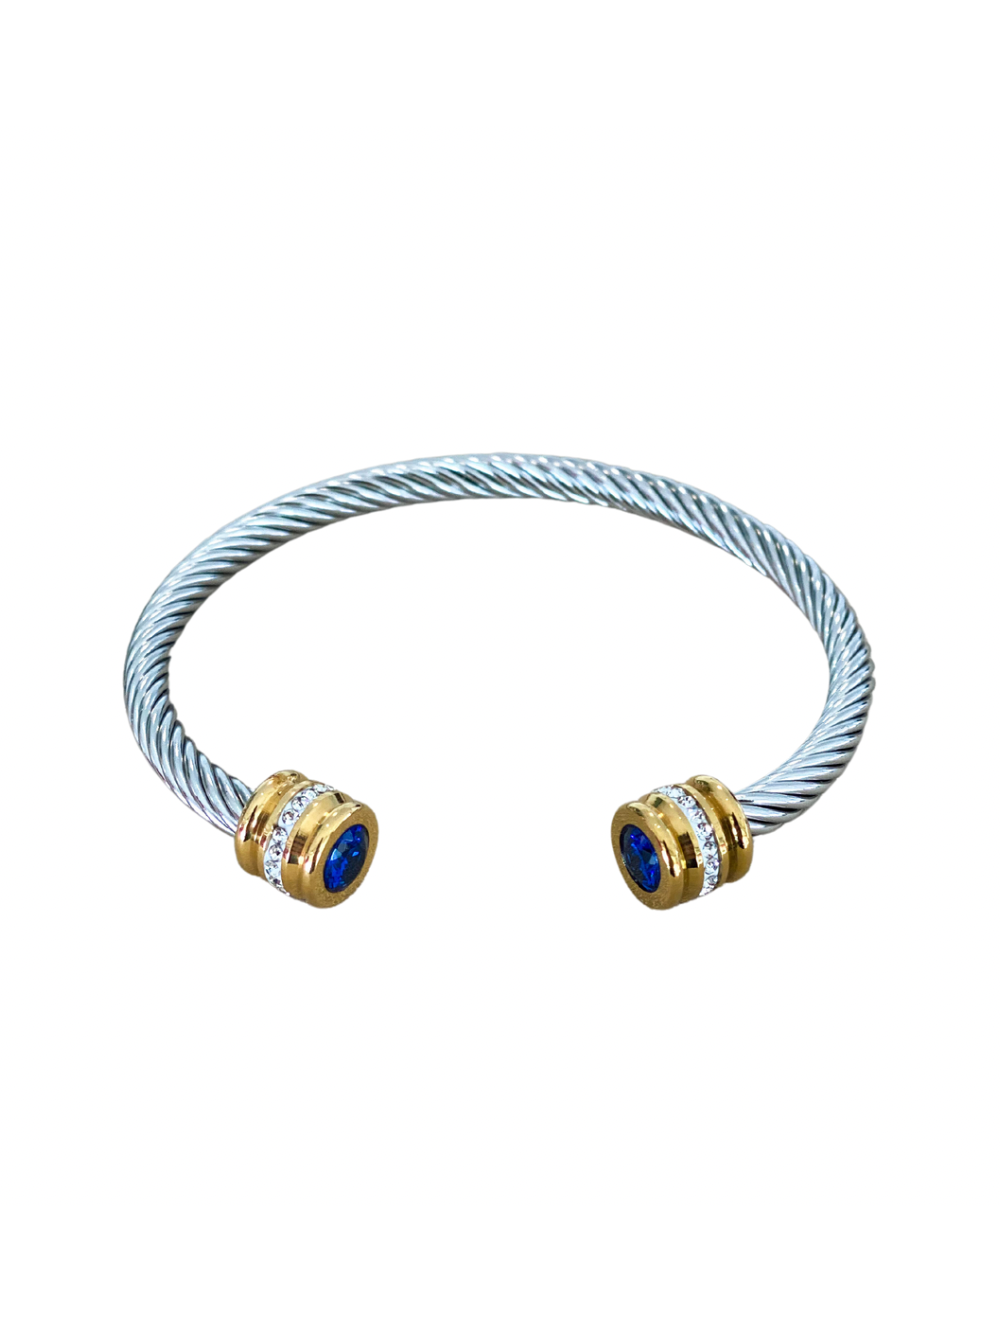 Navy Blue Two Tone Cable Bracelet